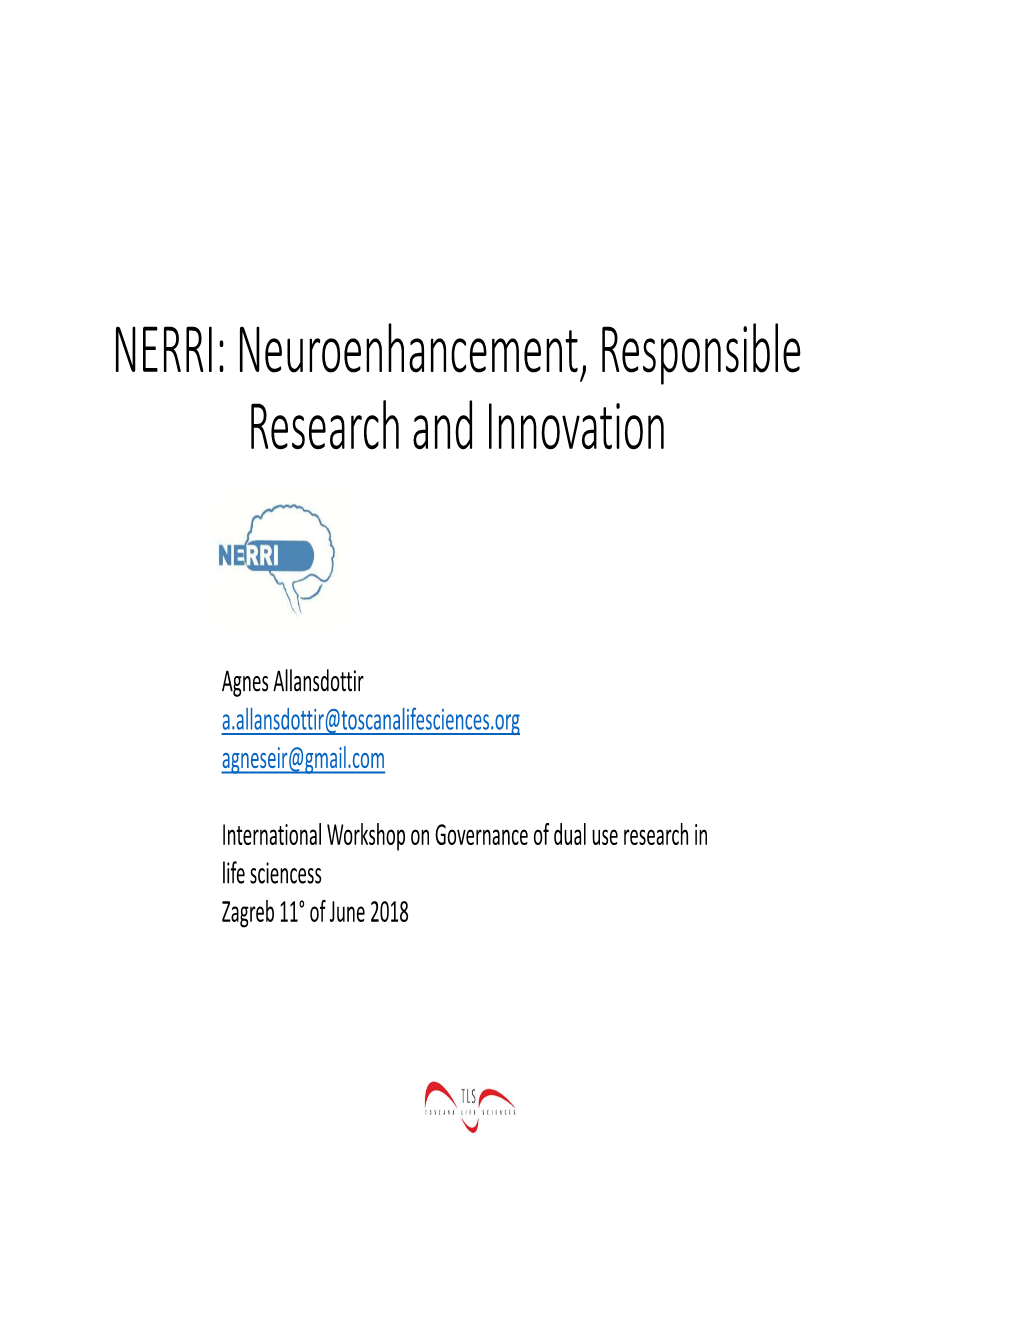 NERRI: Neuroenhancement, Responsible Research and Innovation